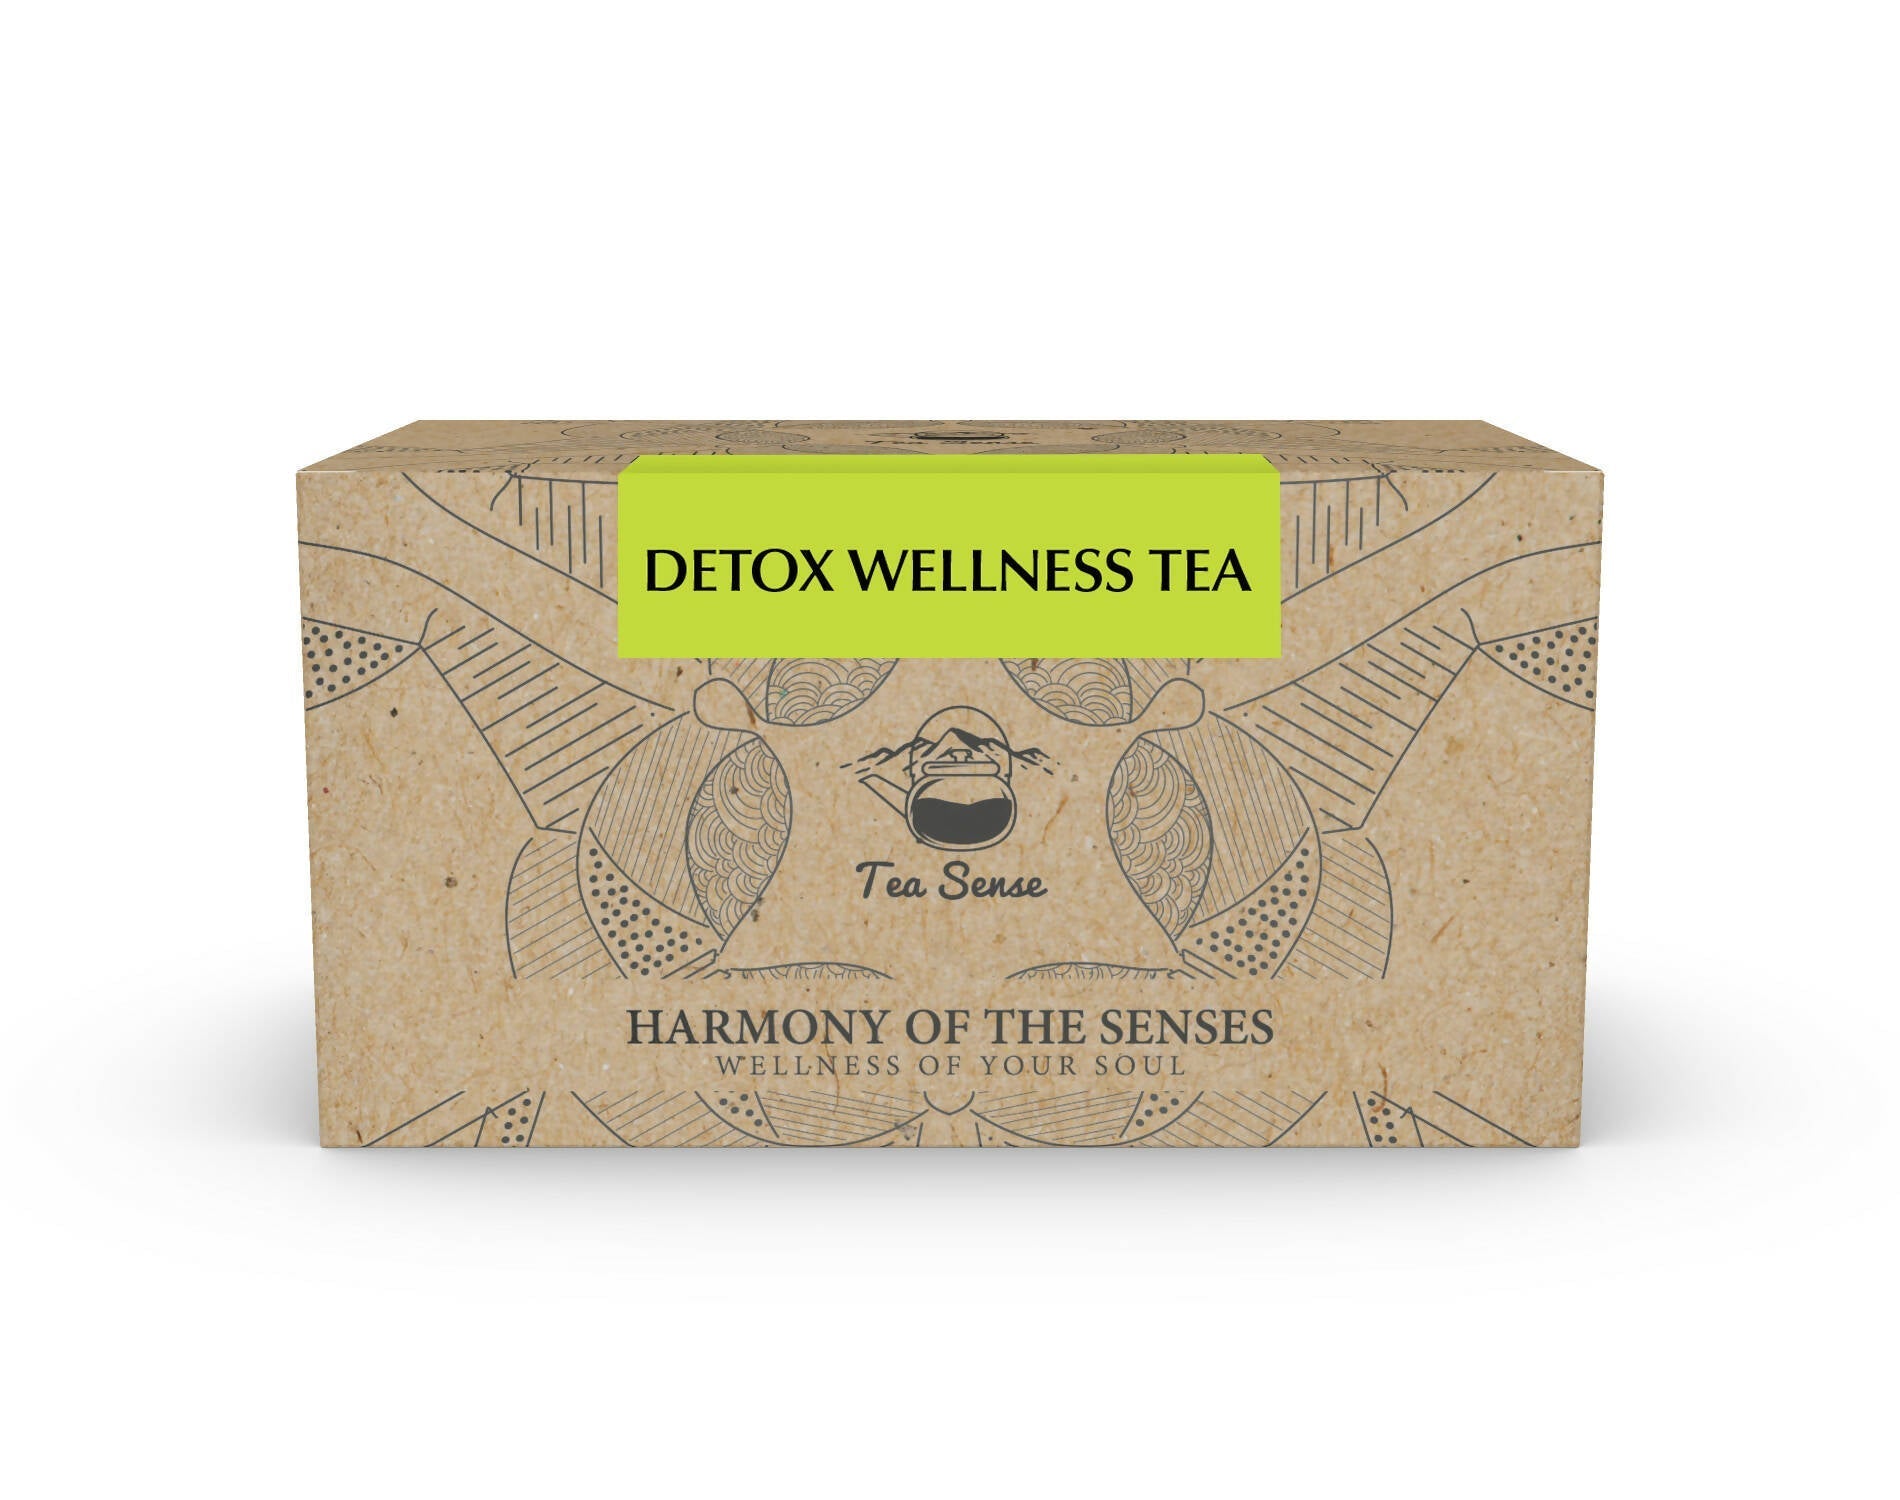 Tea Sense Detox Wellness Tea Bags Box - buy in USA, Australia, Canada